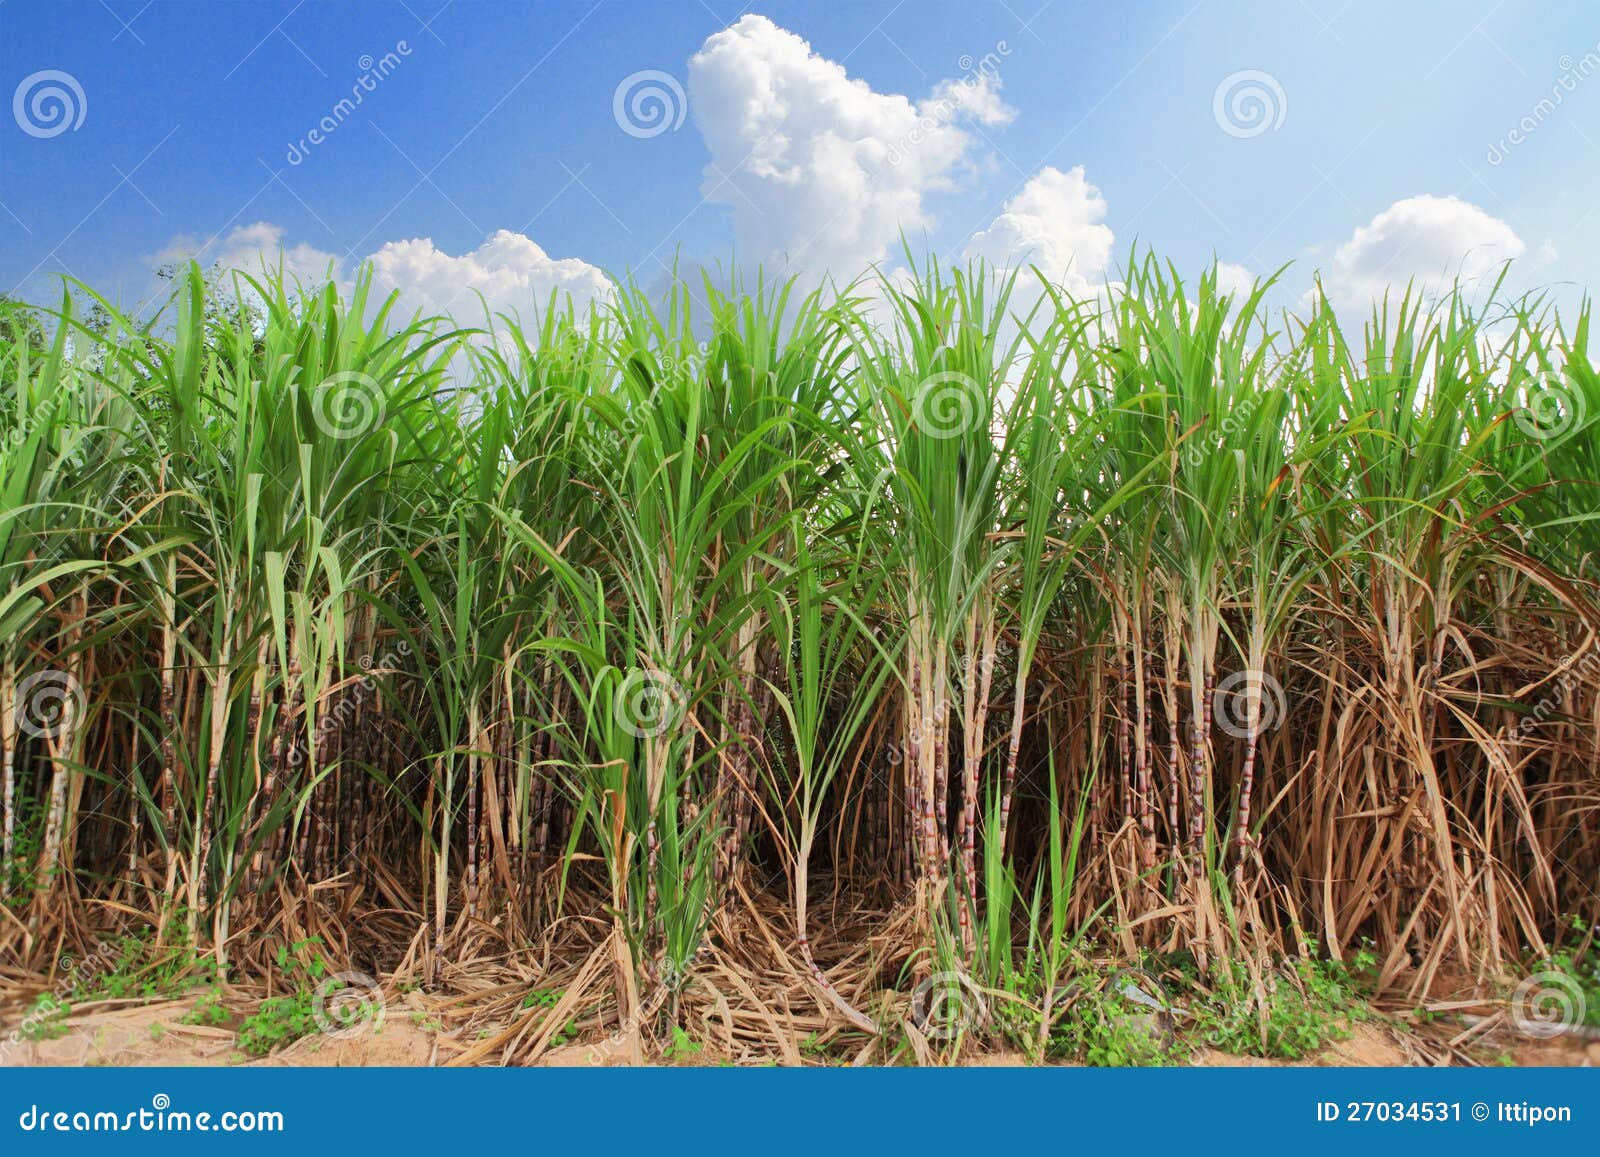 Sugarcane Field Stock Image